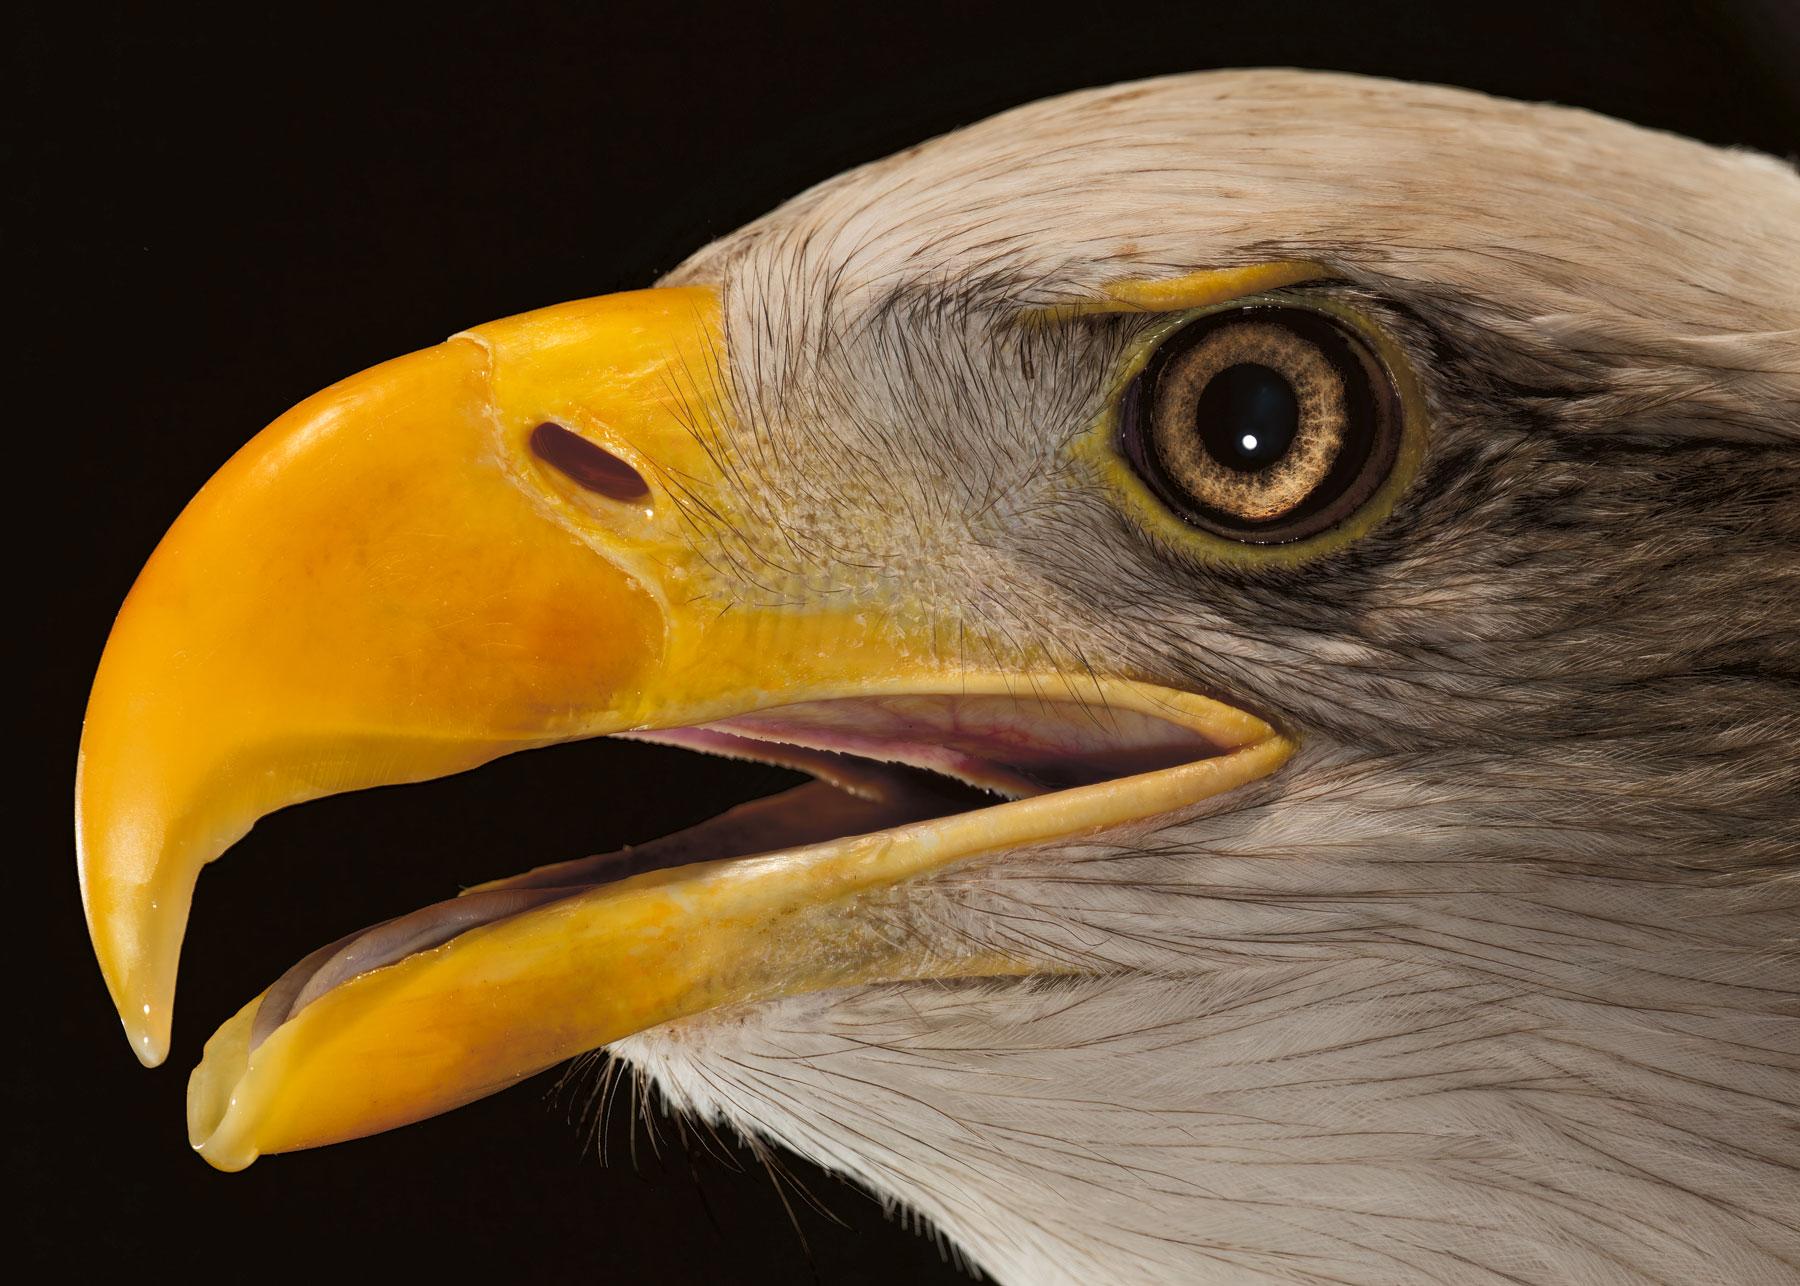 Tim Platt Still-Life Photograph - Bald Eagle #3 - Signed limited edition wildlife fine art, Contemporary Portrait